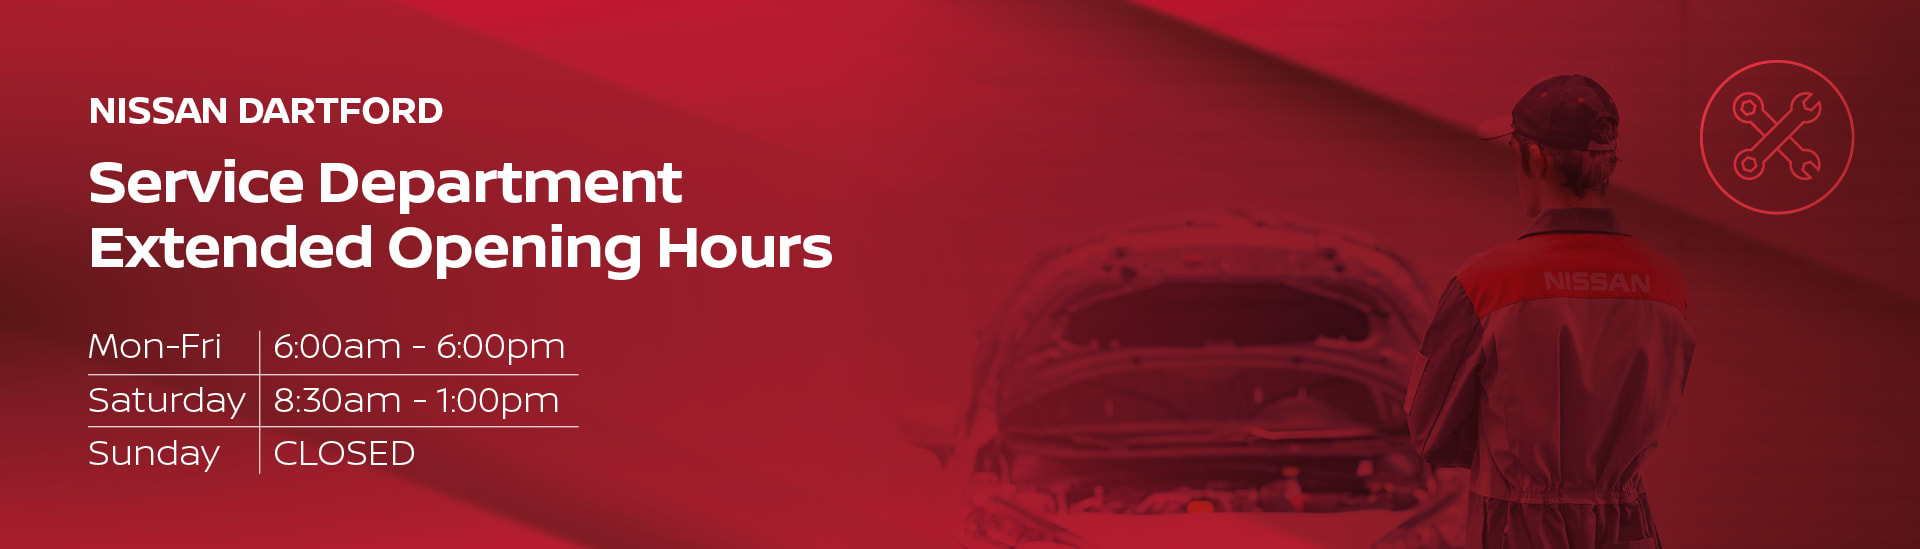 Nissan Dartford hours